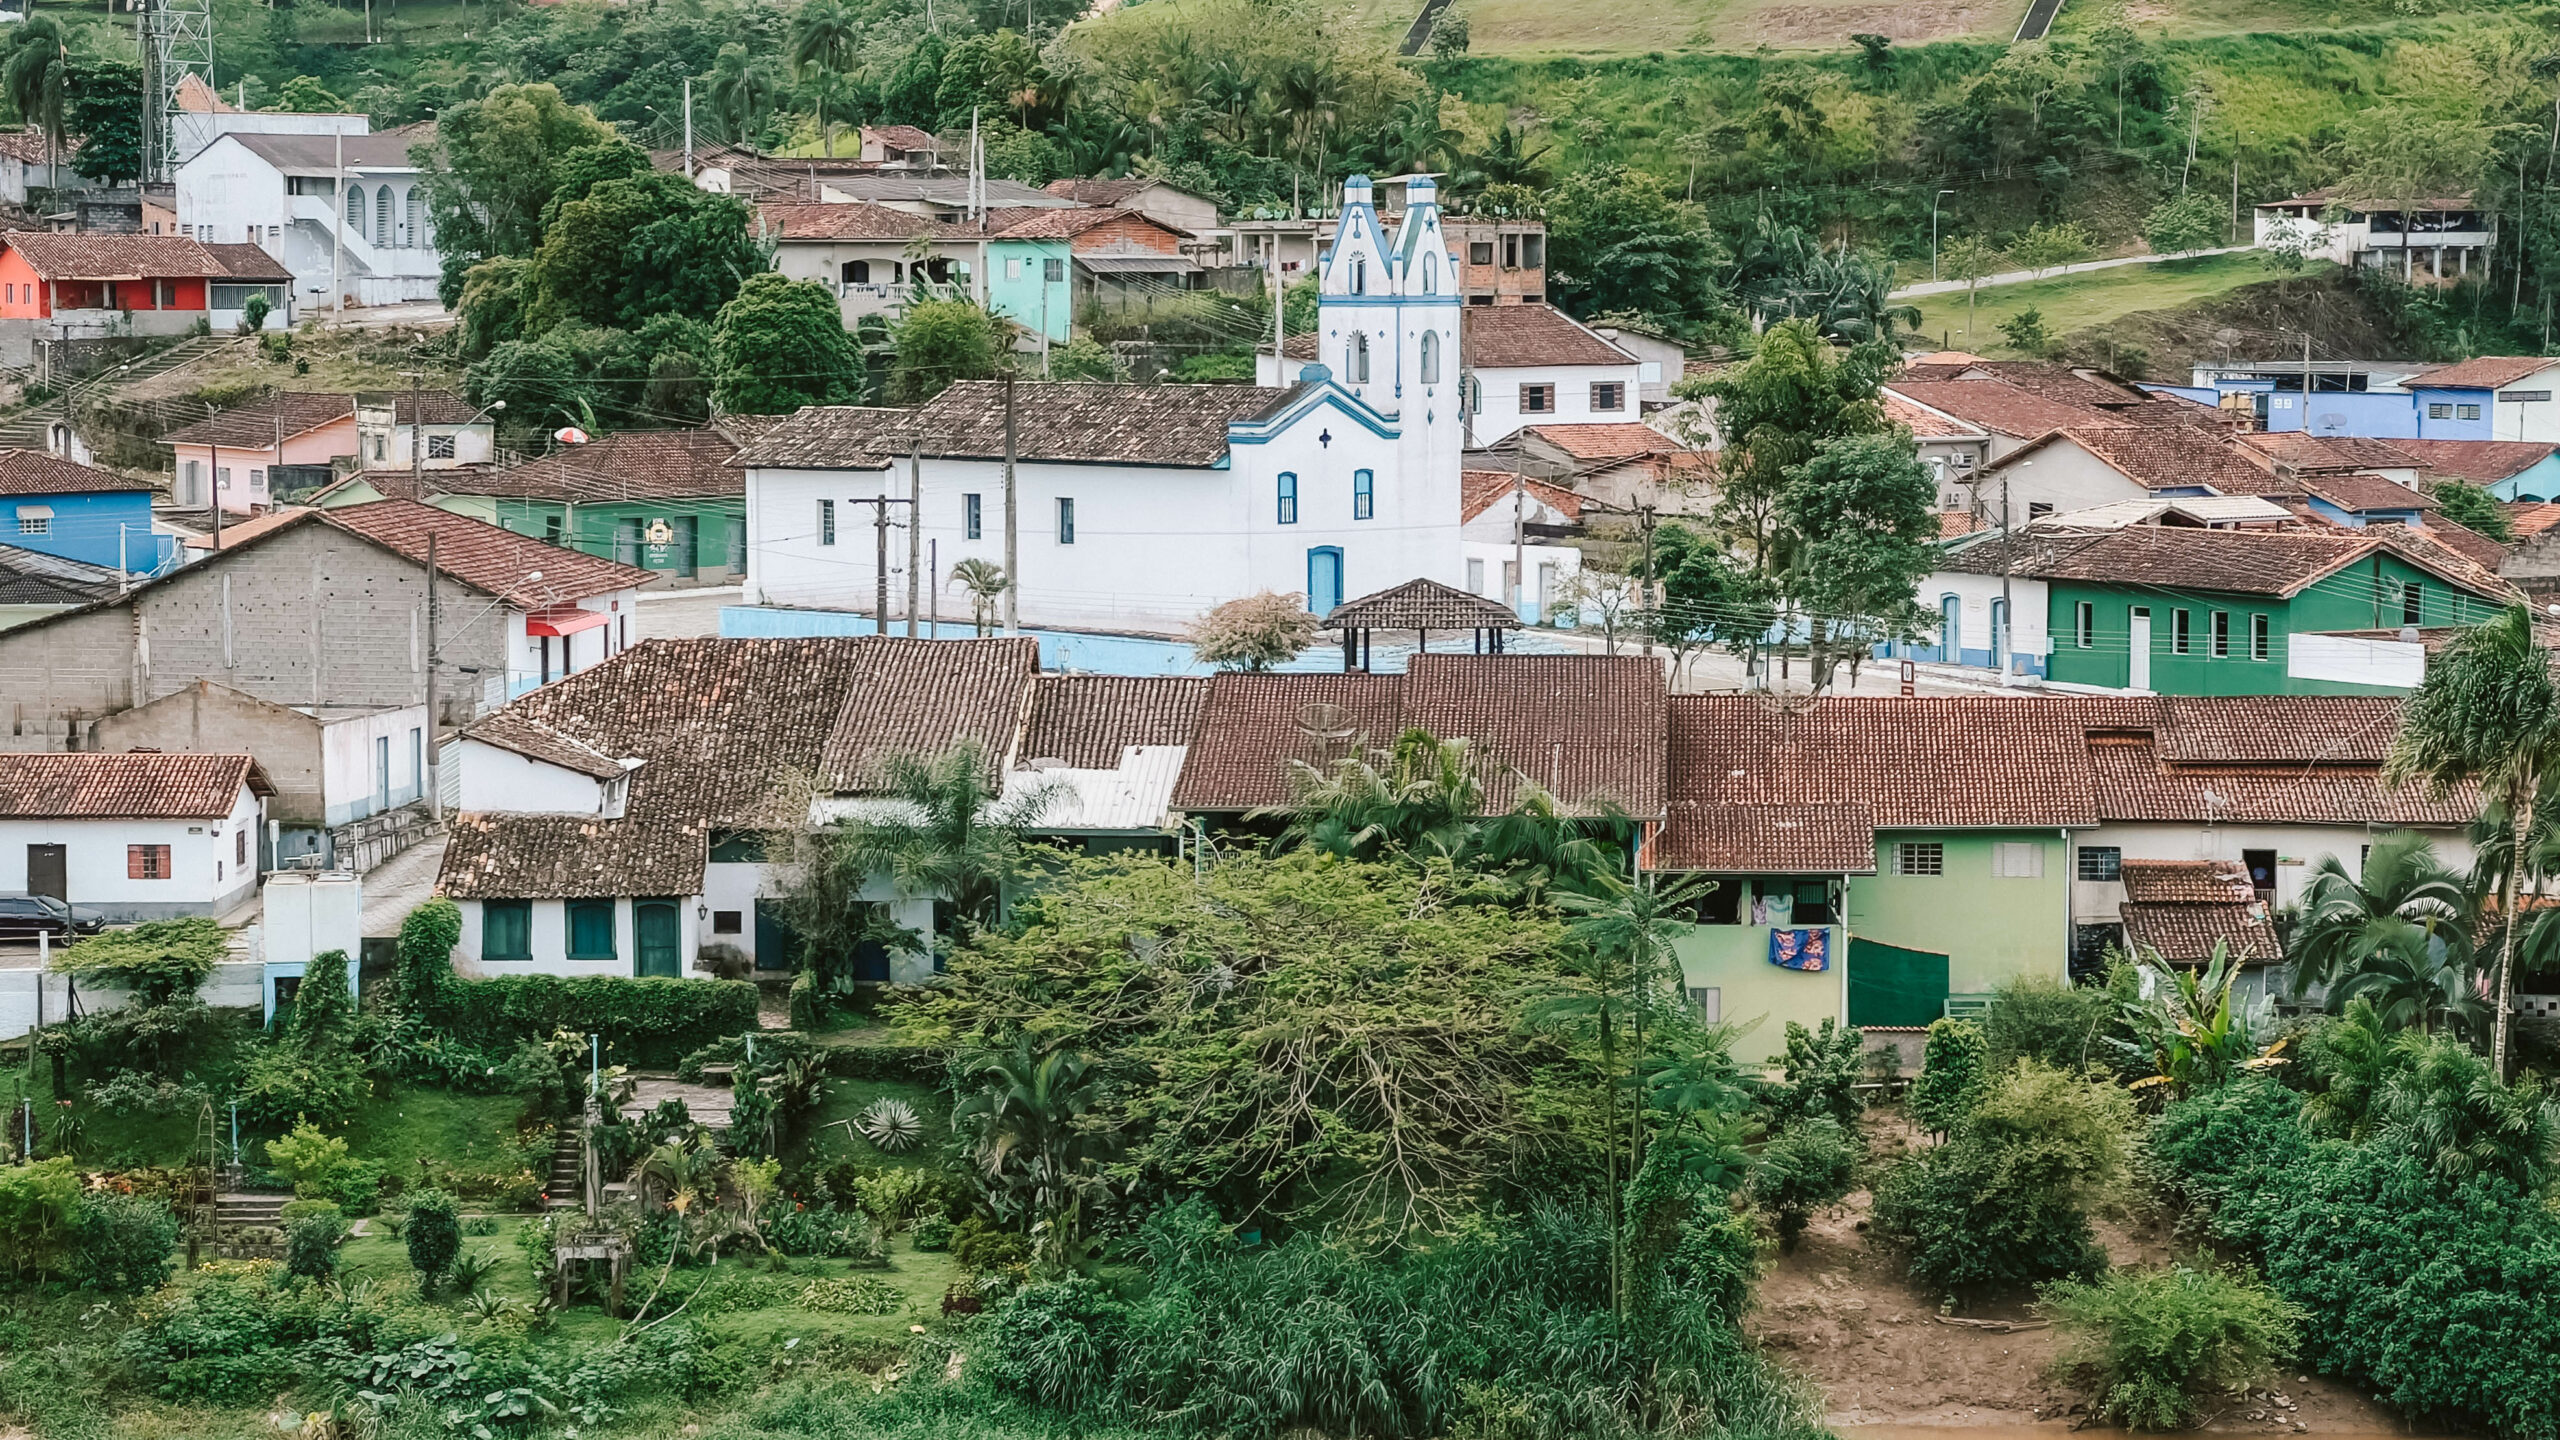 Iporanga in the Vale do Ribeira, Brazil